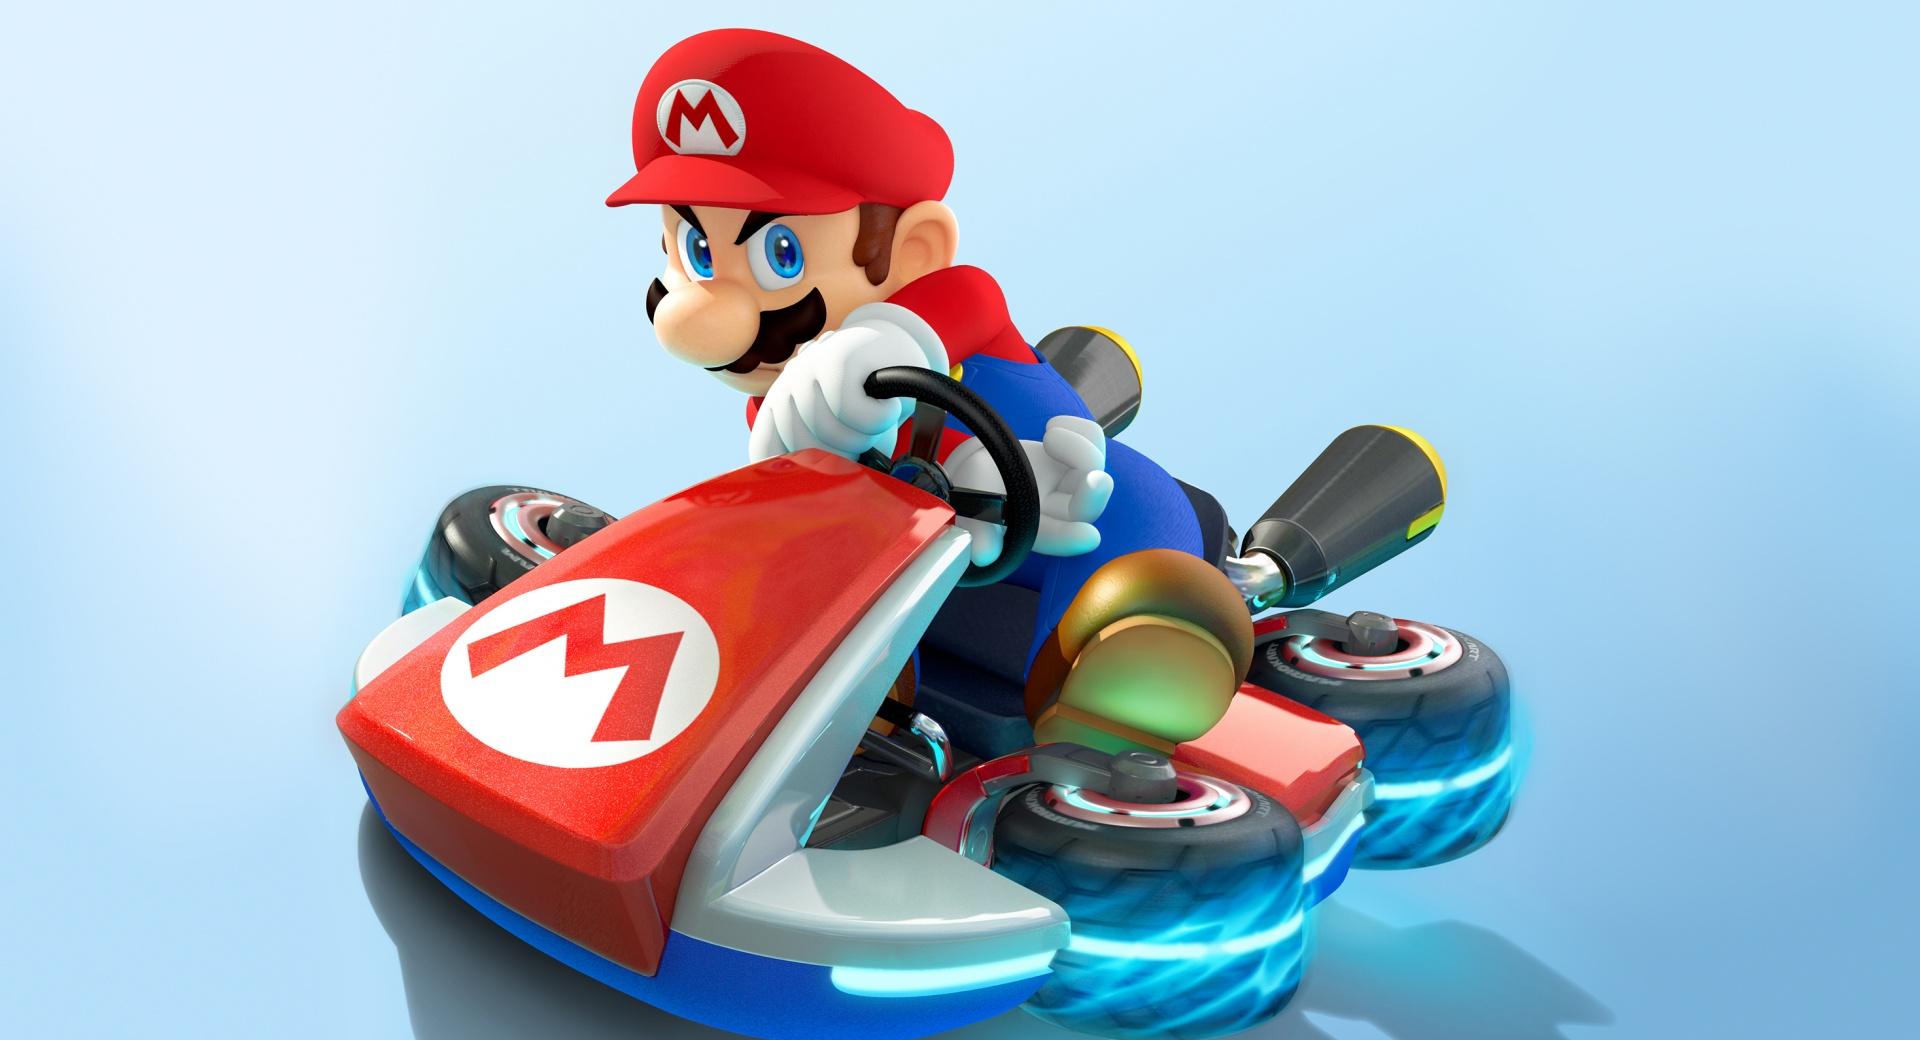 Mario Kart 8 - Mario at 1280 x 960 size wallpapers HD quality